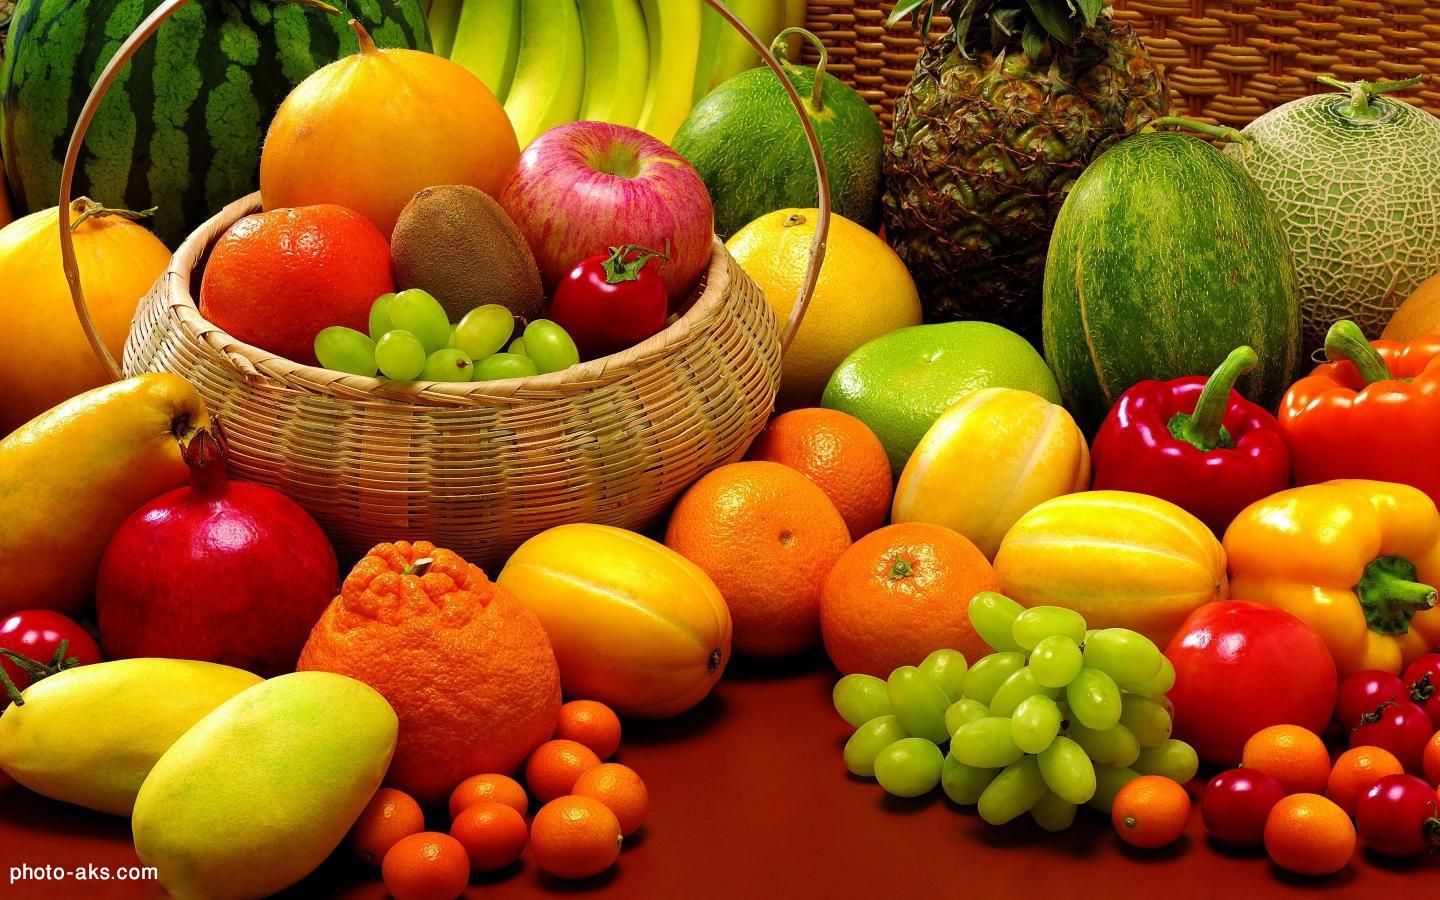 Fruits-and-Veggies